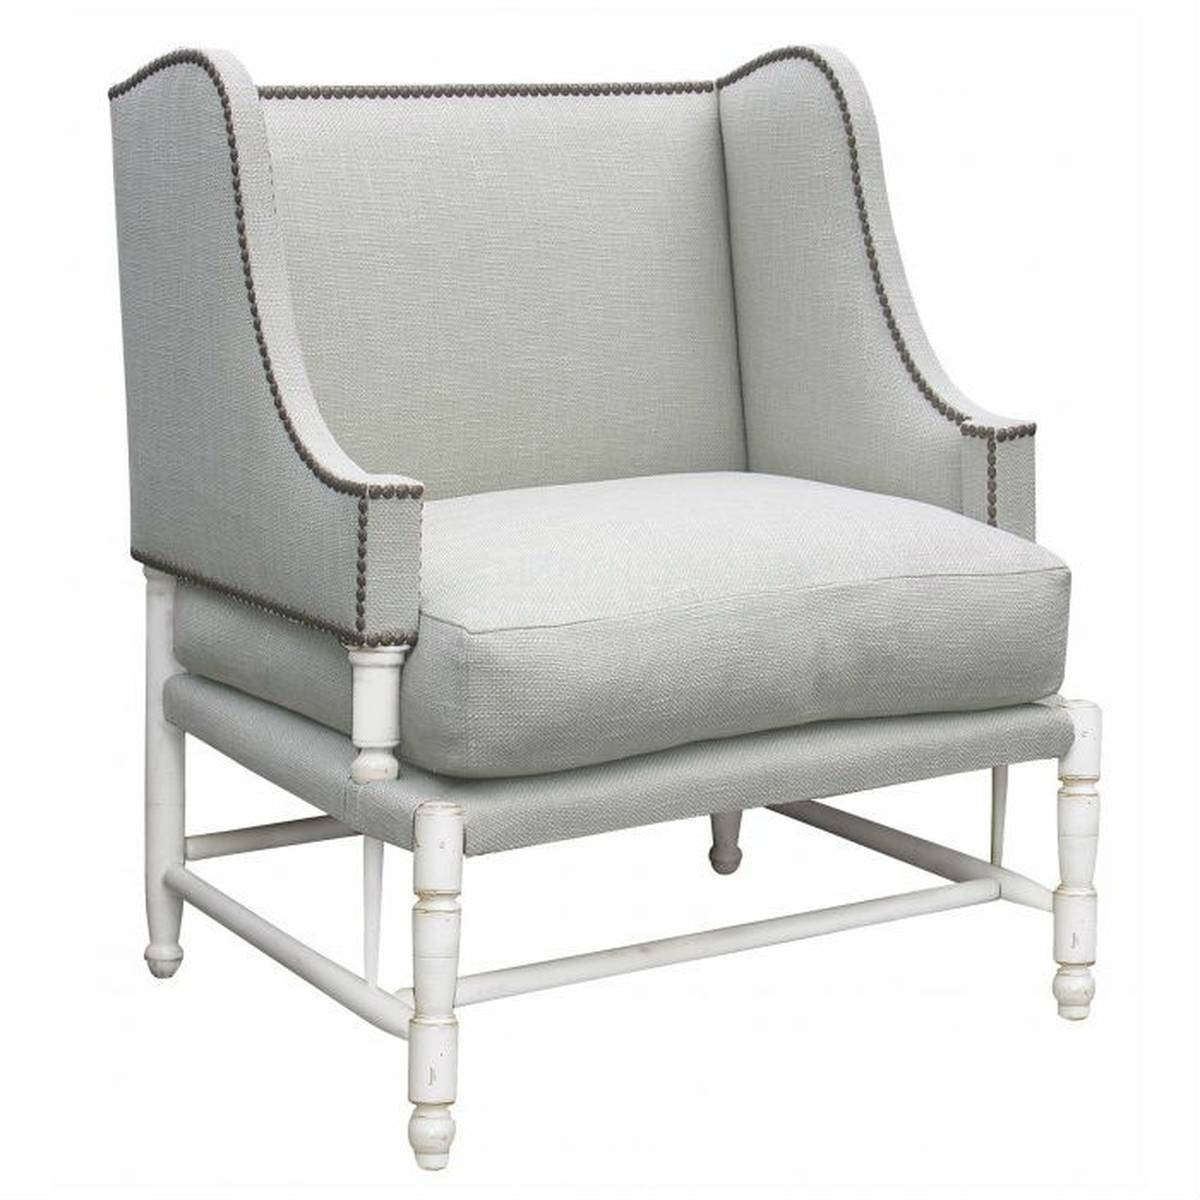 Кресло 143B armchair из Франции фабрики MOISSONNIER